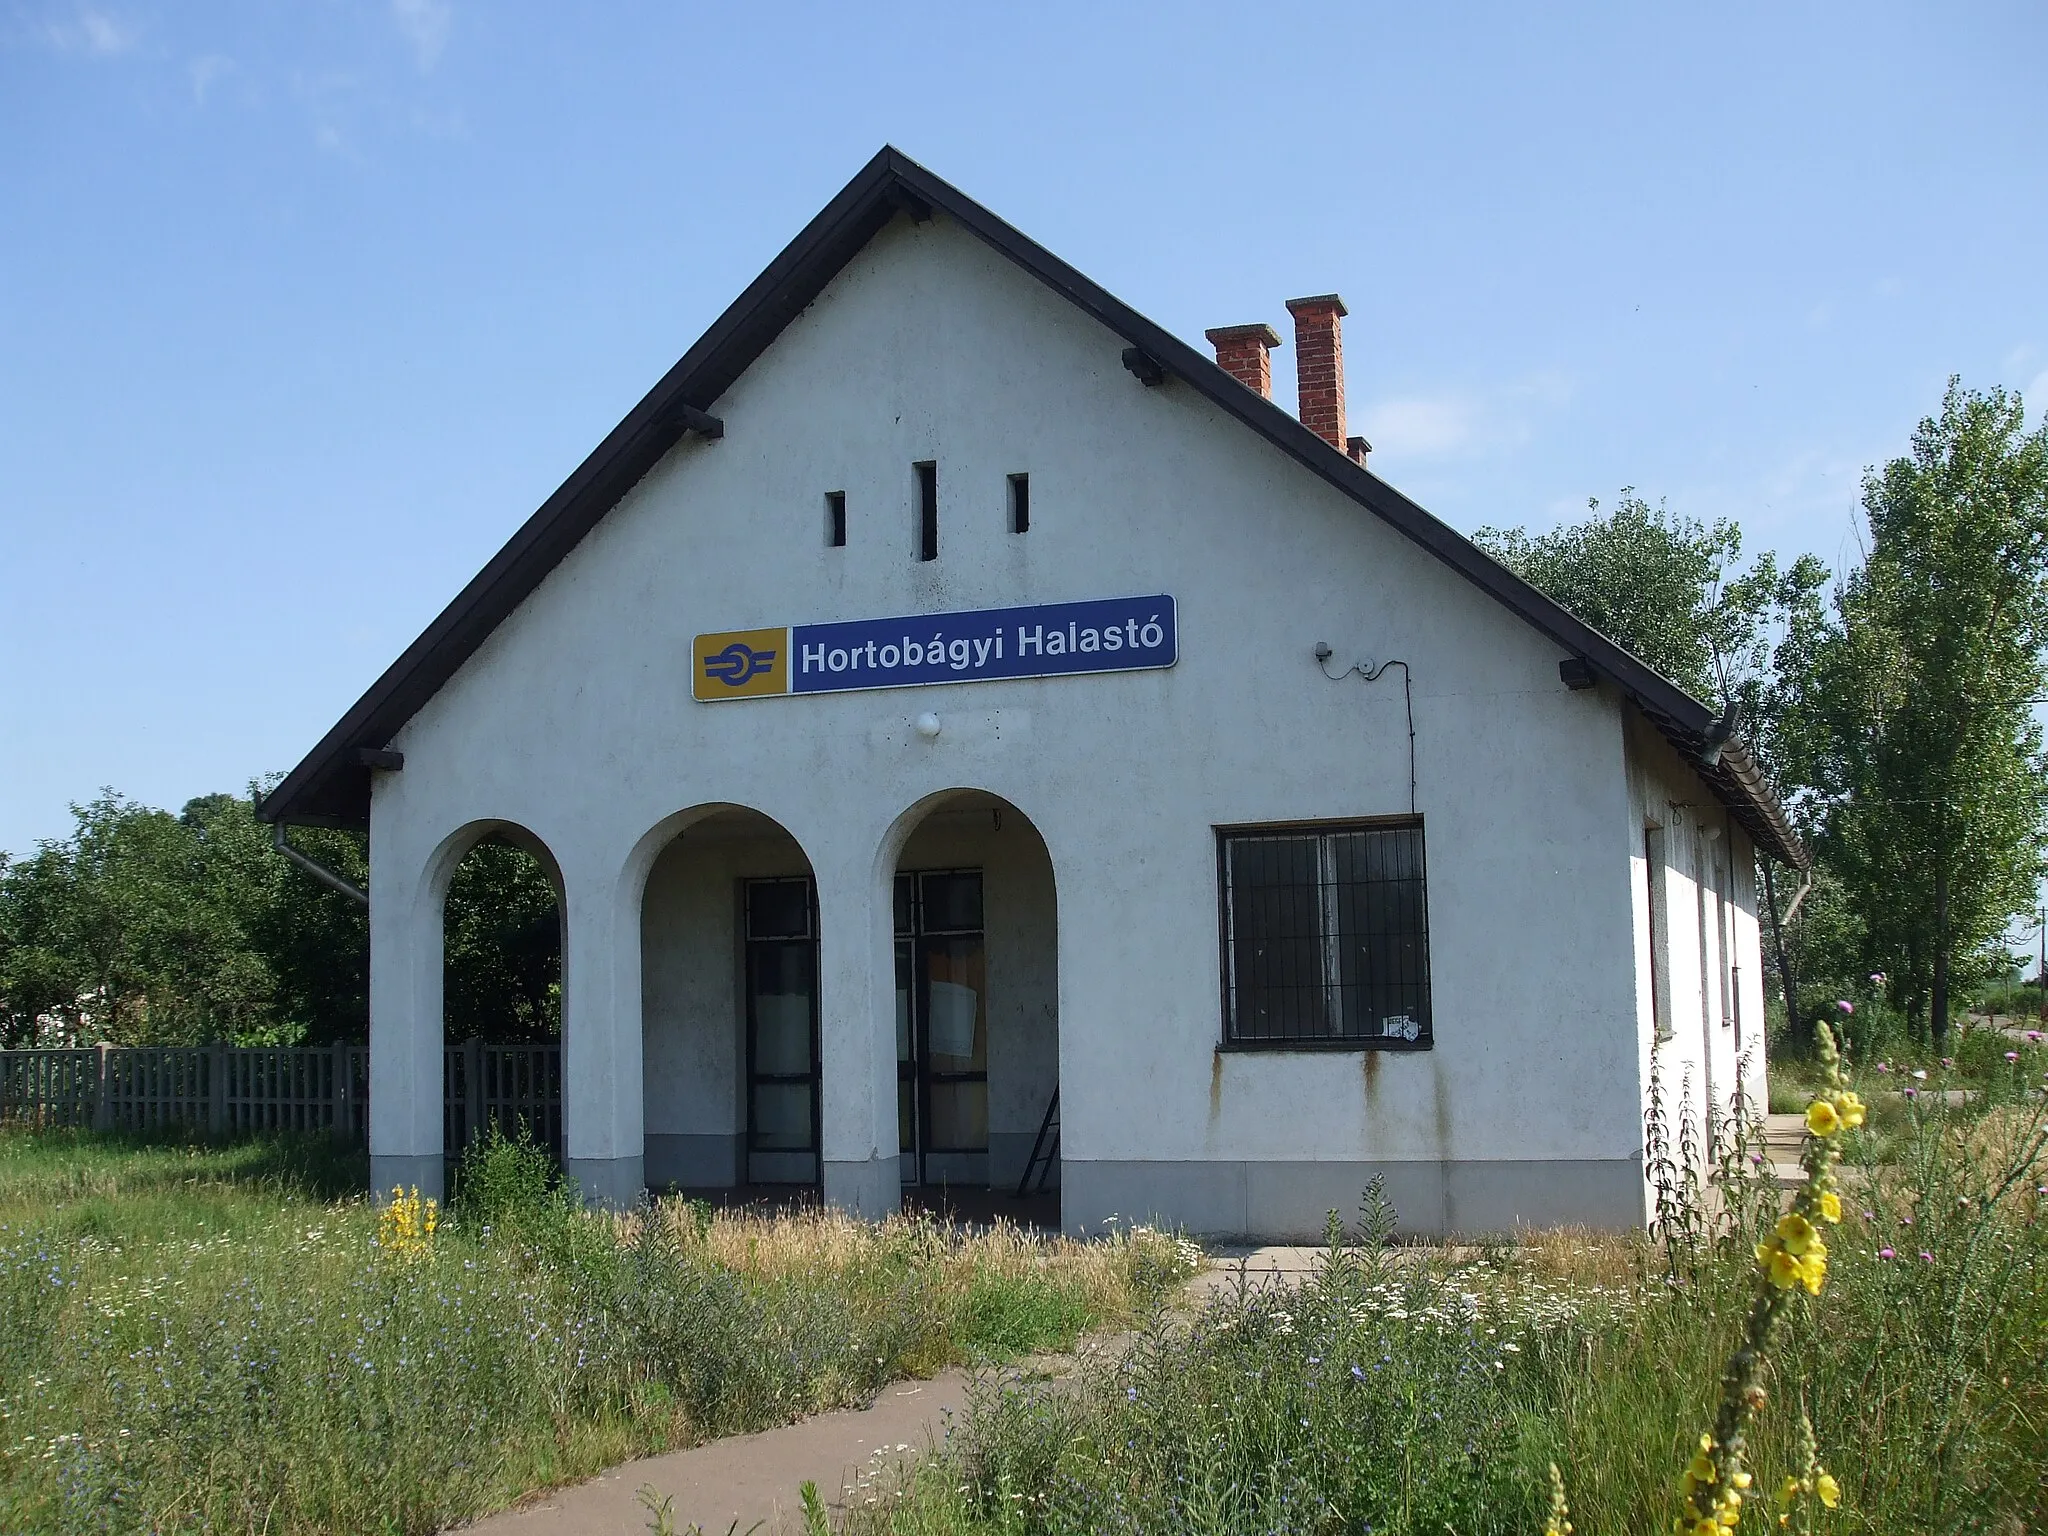 Photo showing: Railway stop of Hortobágyi Halastó in the Debrecen–Füzesabony line, Hajdú-Bihar County, Hungary.